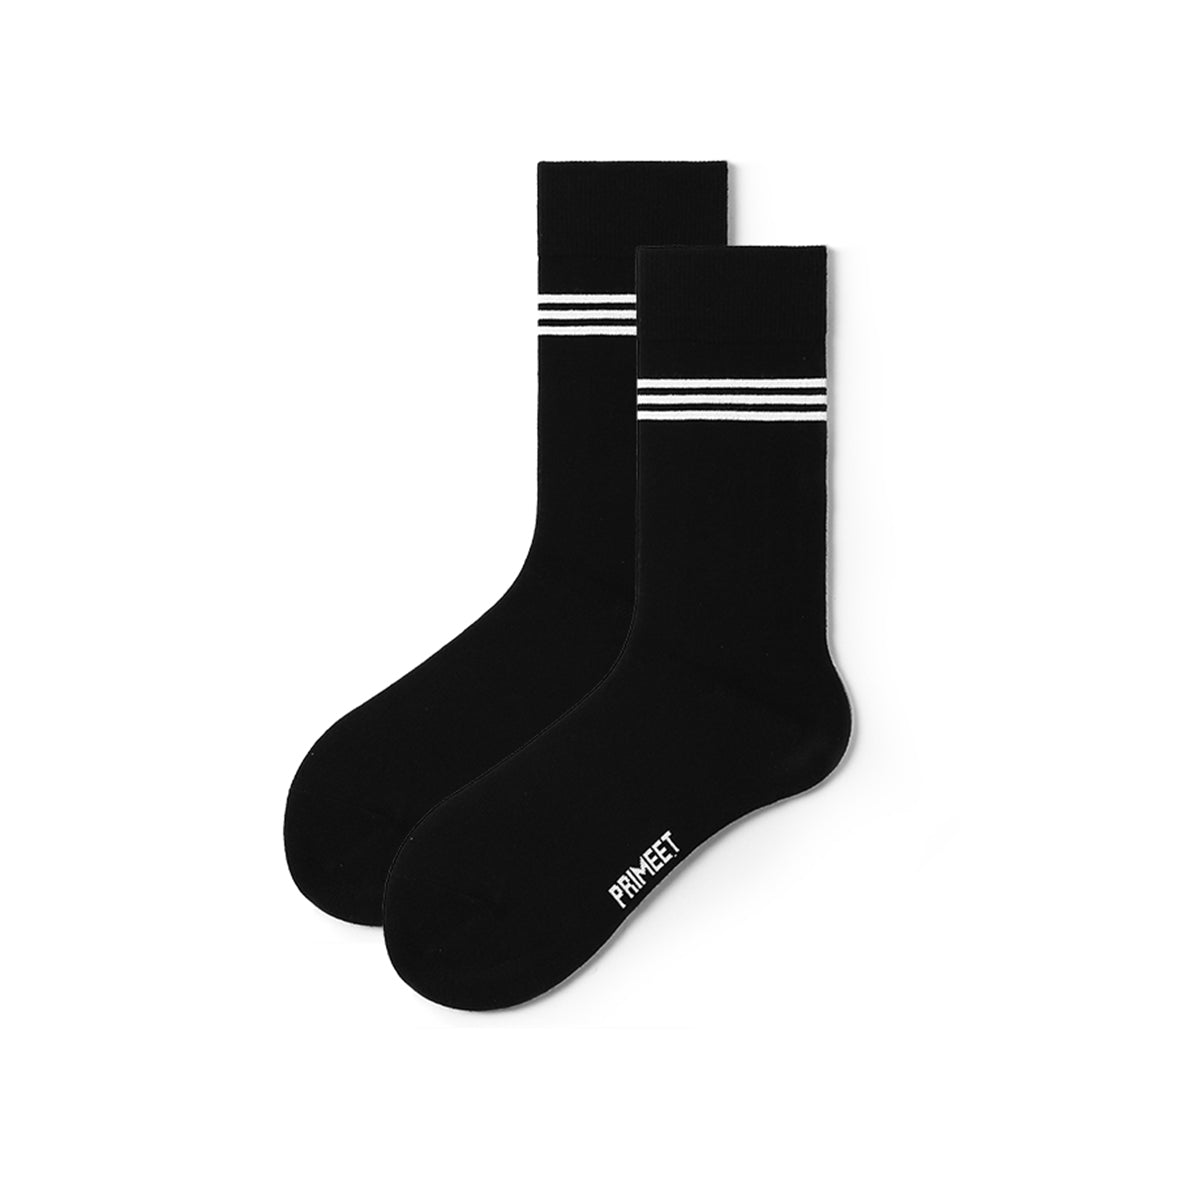 All Black All-season Men 5pcs Crew Socks Set - 0cm